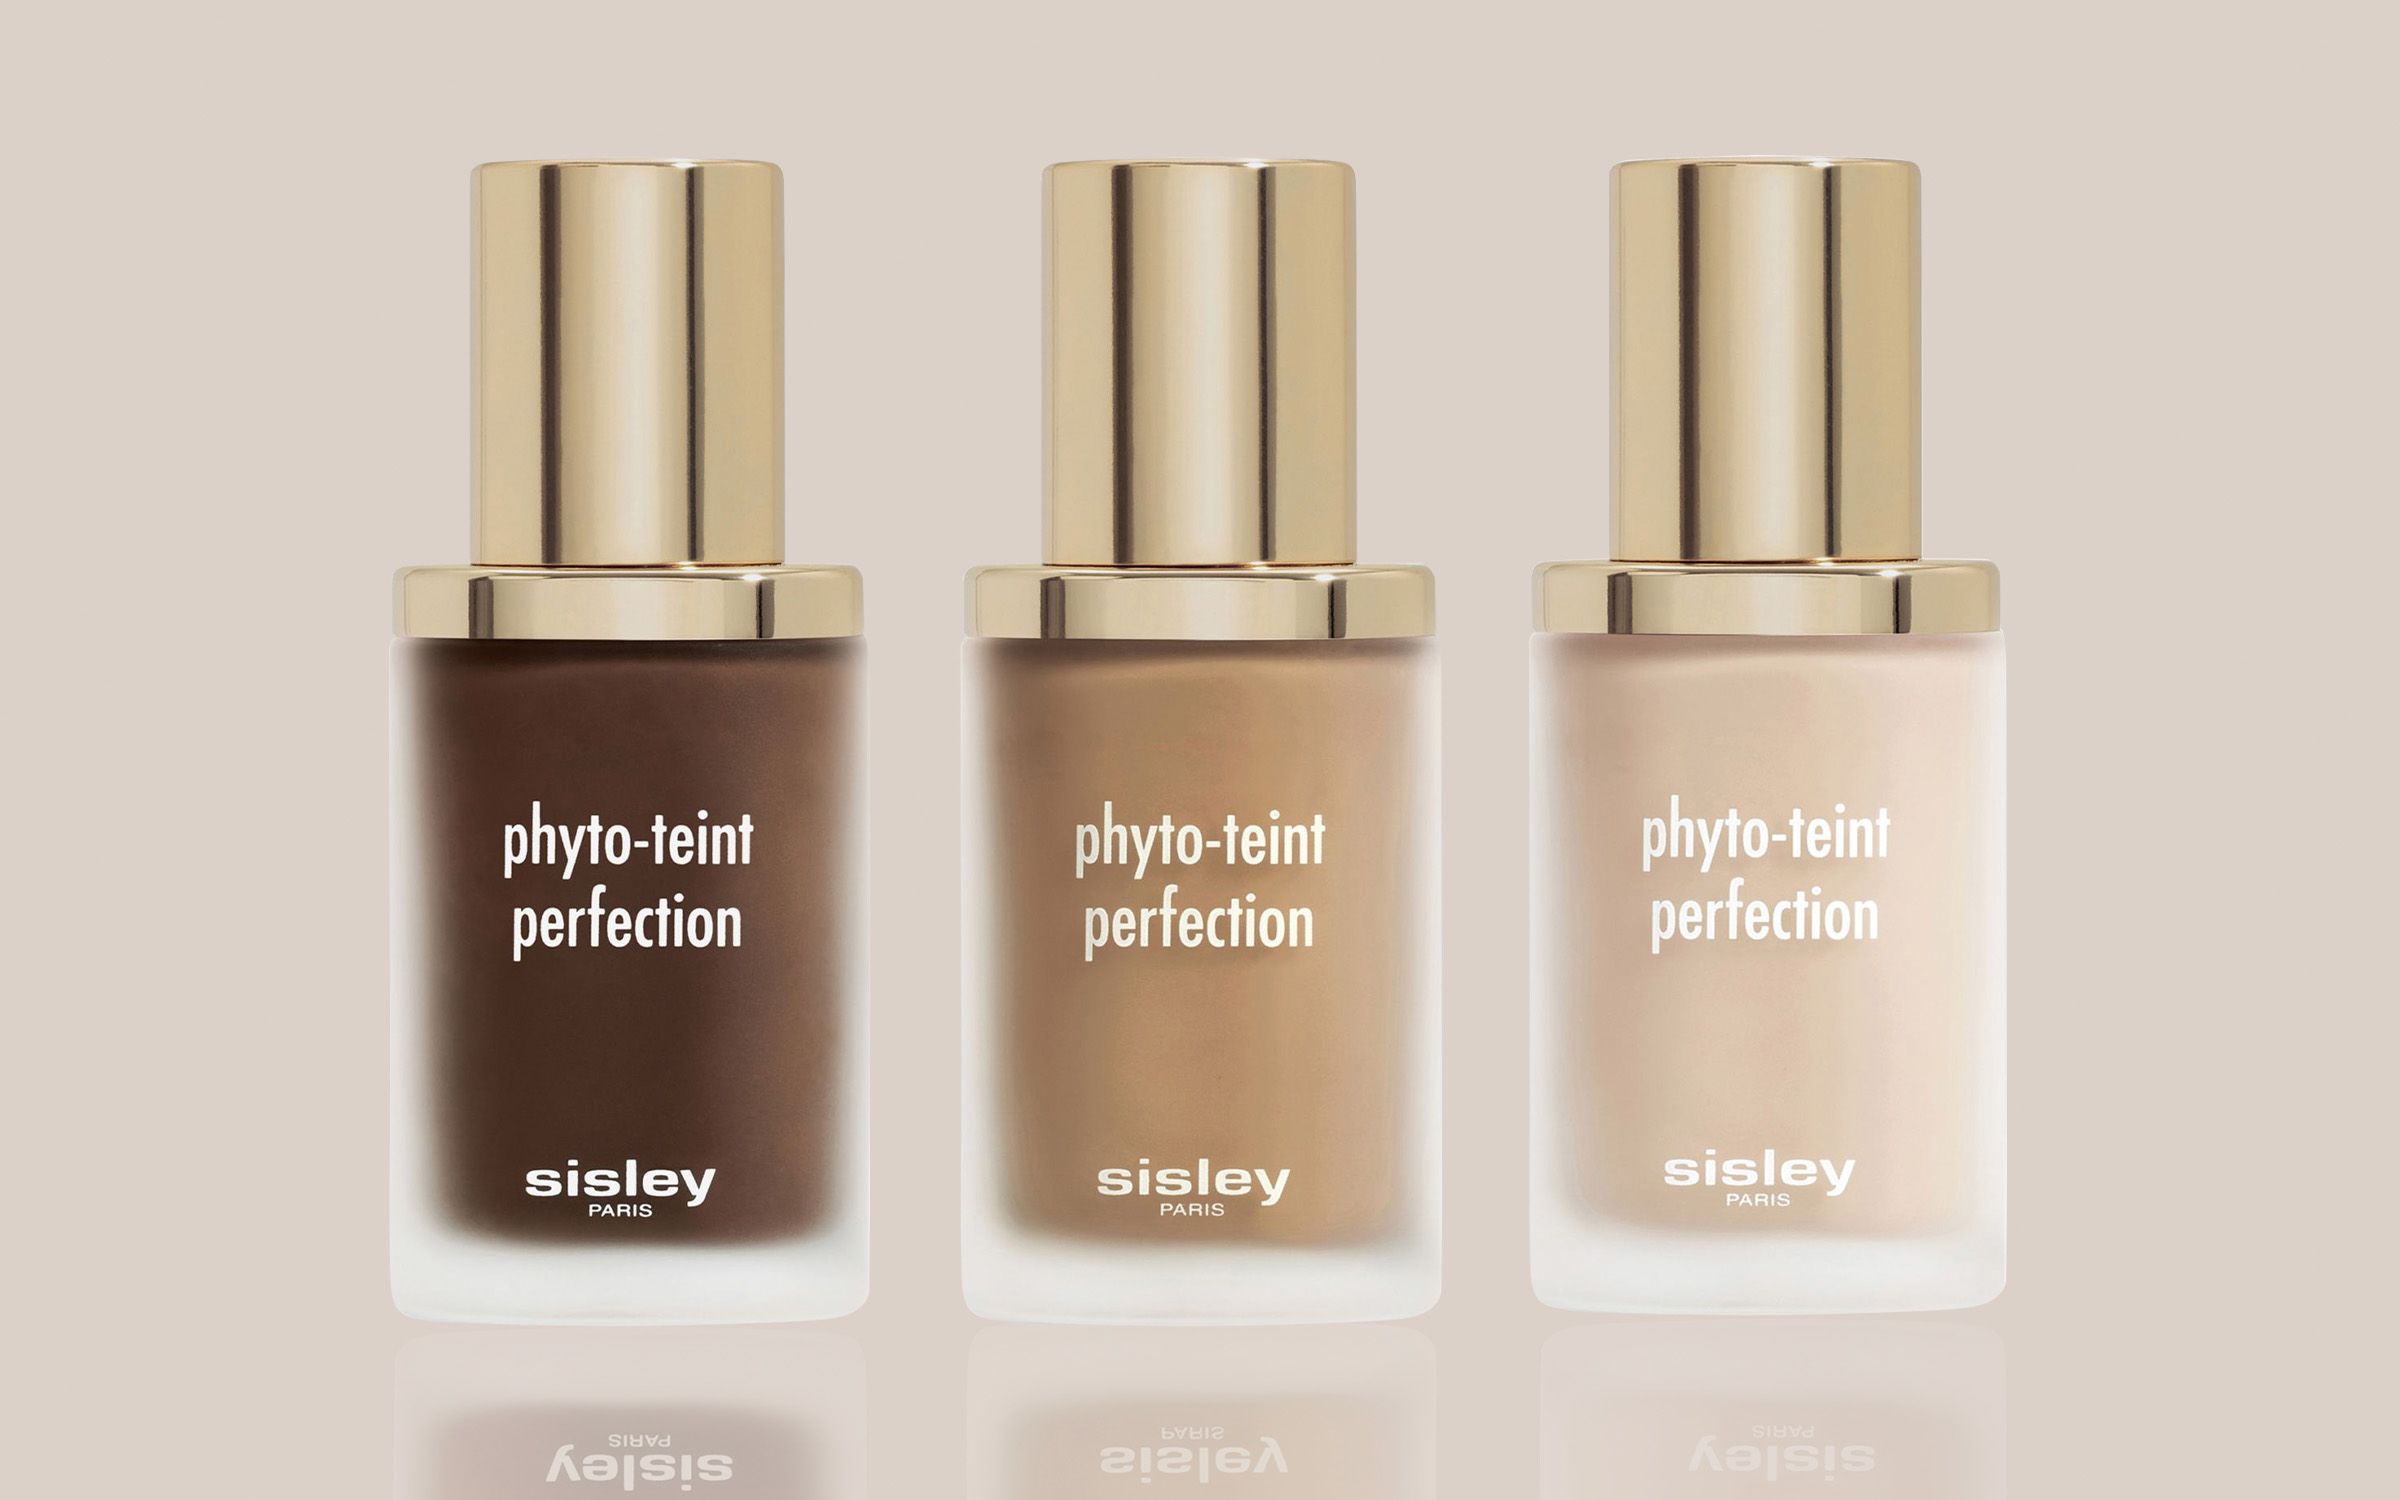 Sisley Phyto-Teint Perfection Foundation bottles